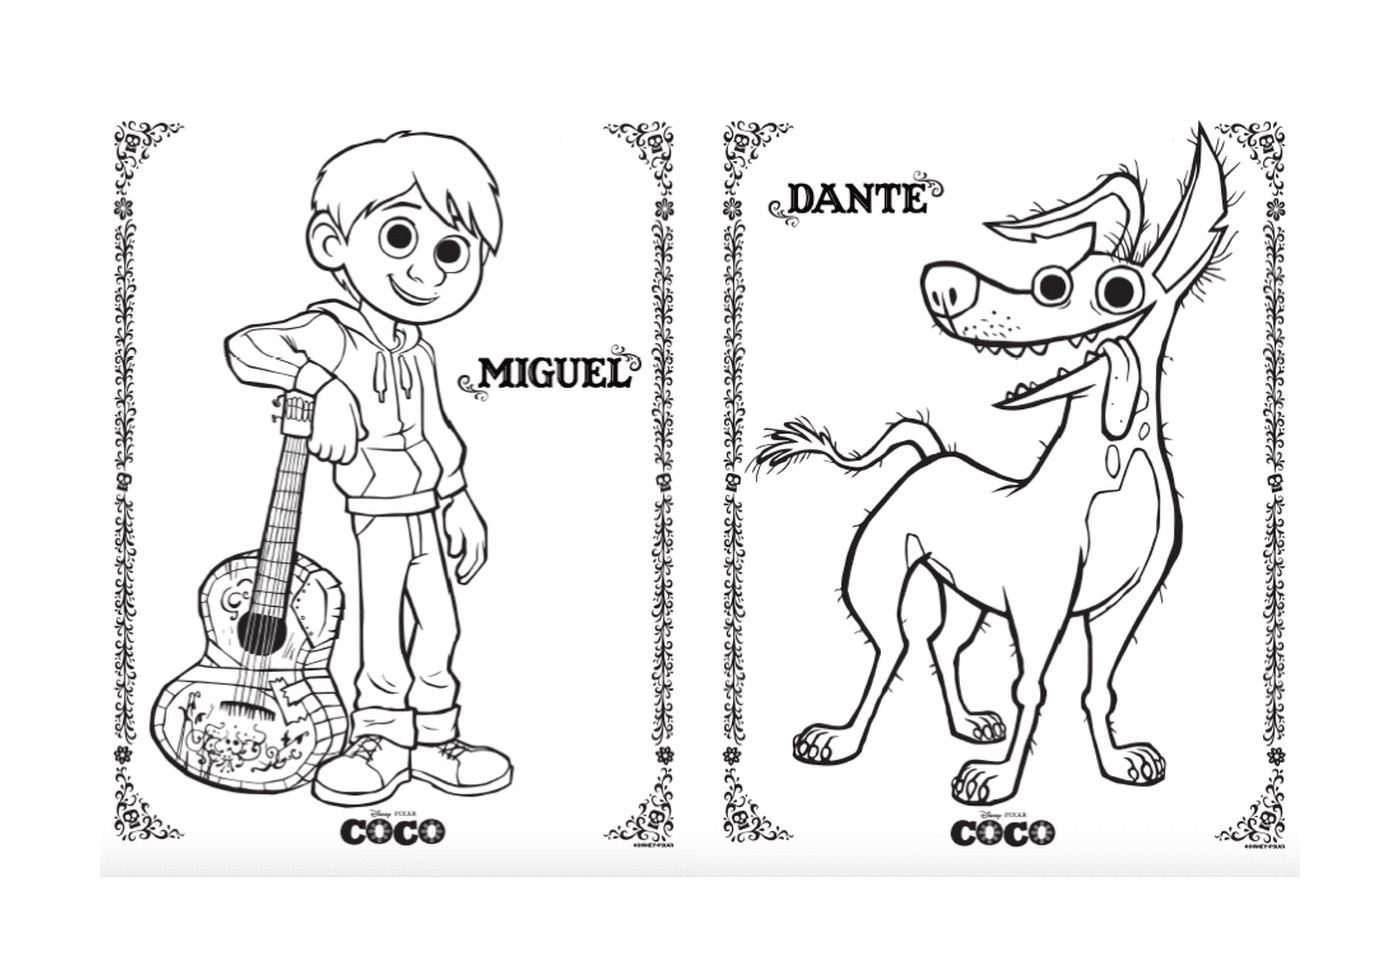  و(ميغيل) و(دان دانت) الكلب في (ديزني كوكا بيكسار) 